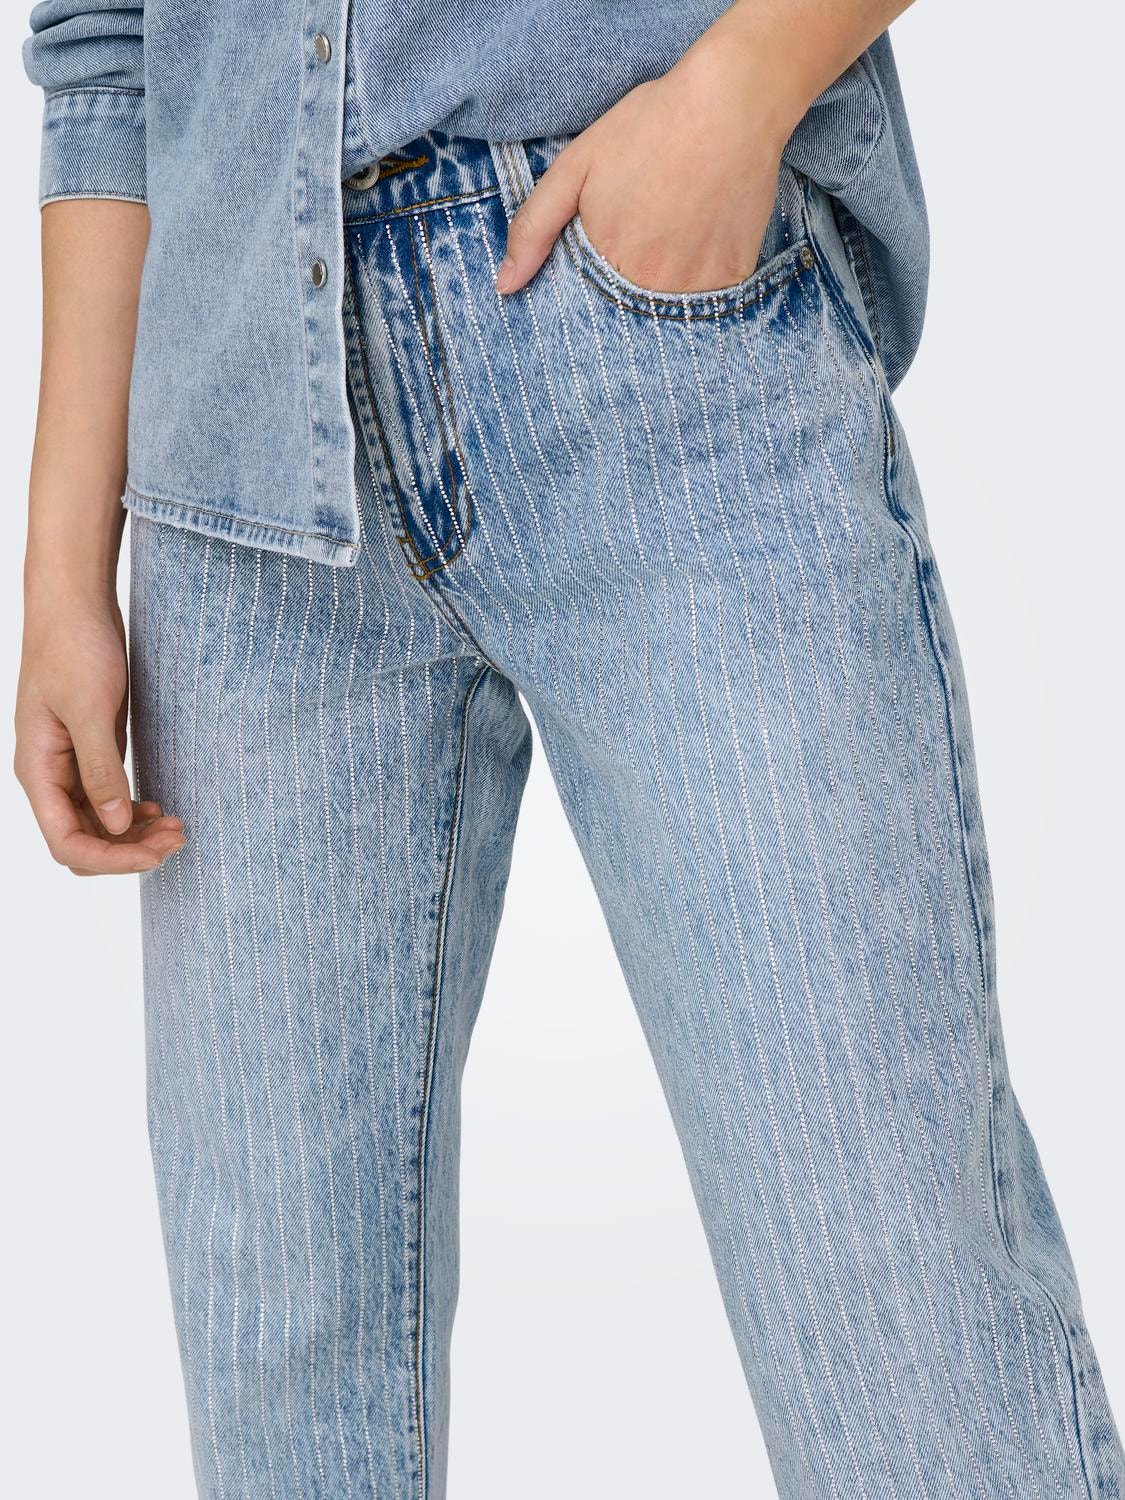 ONLY Jeans Straight Fit Vita media -Light Blue Denim - 15297087